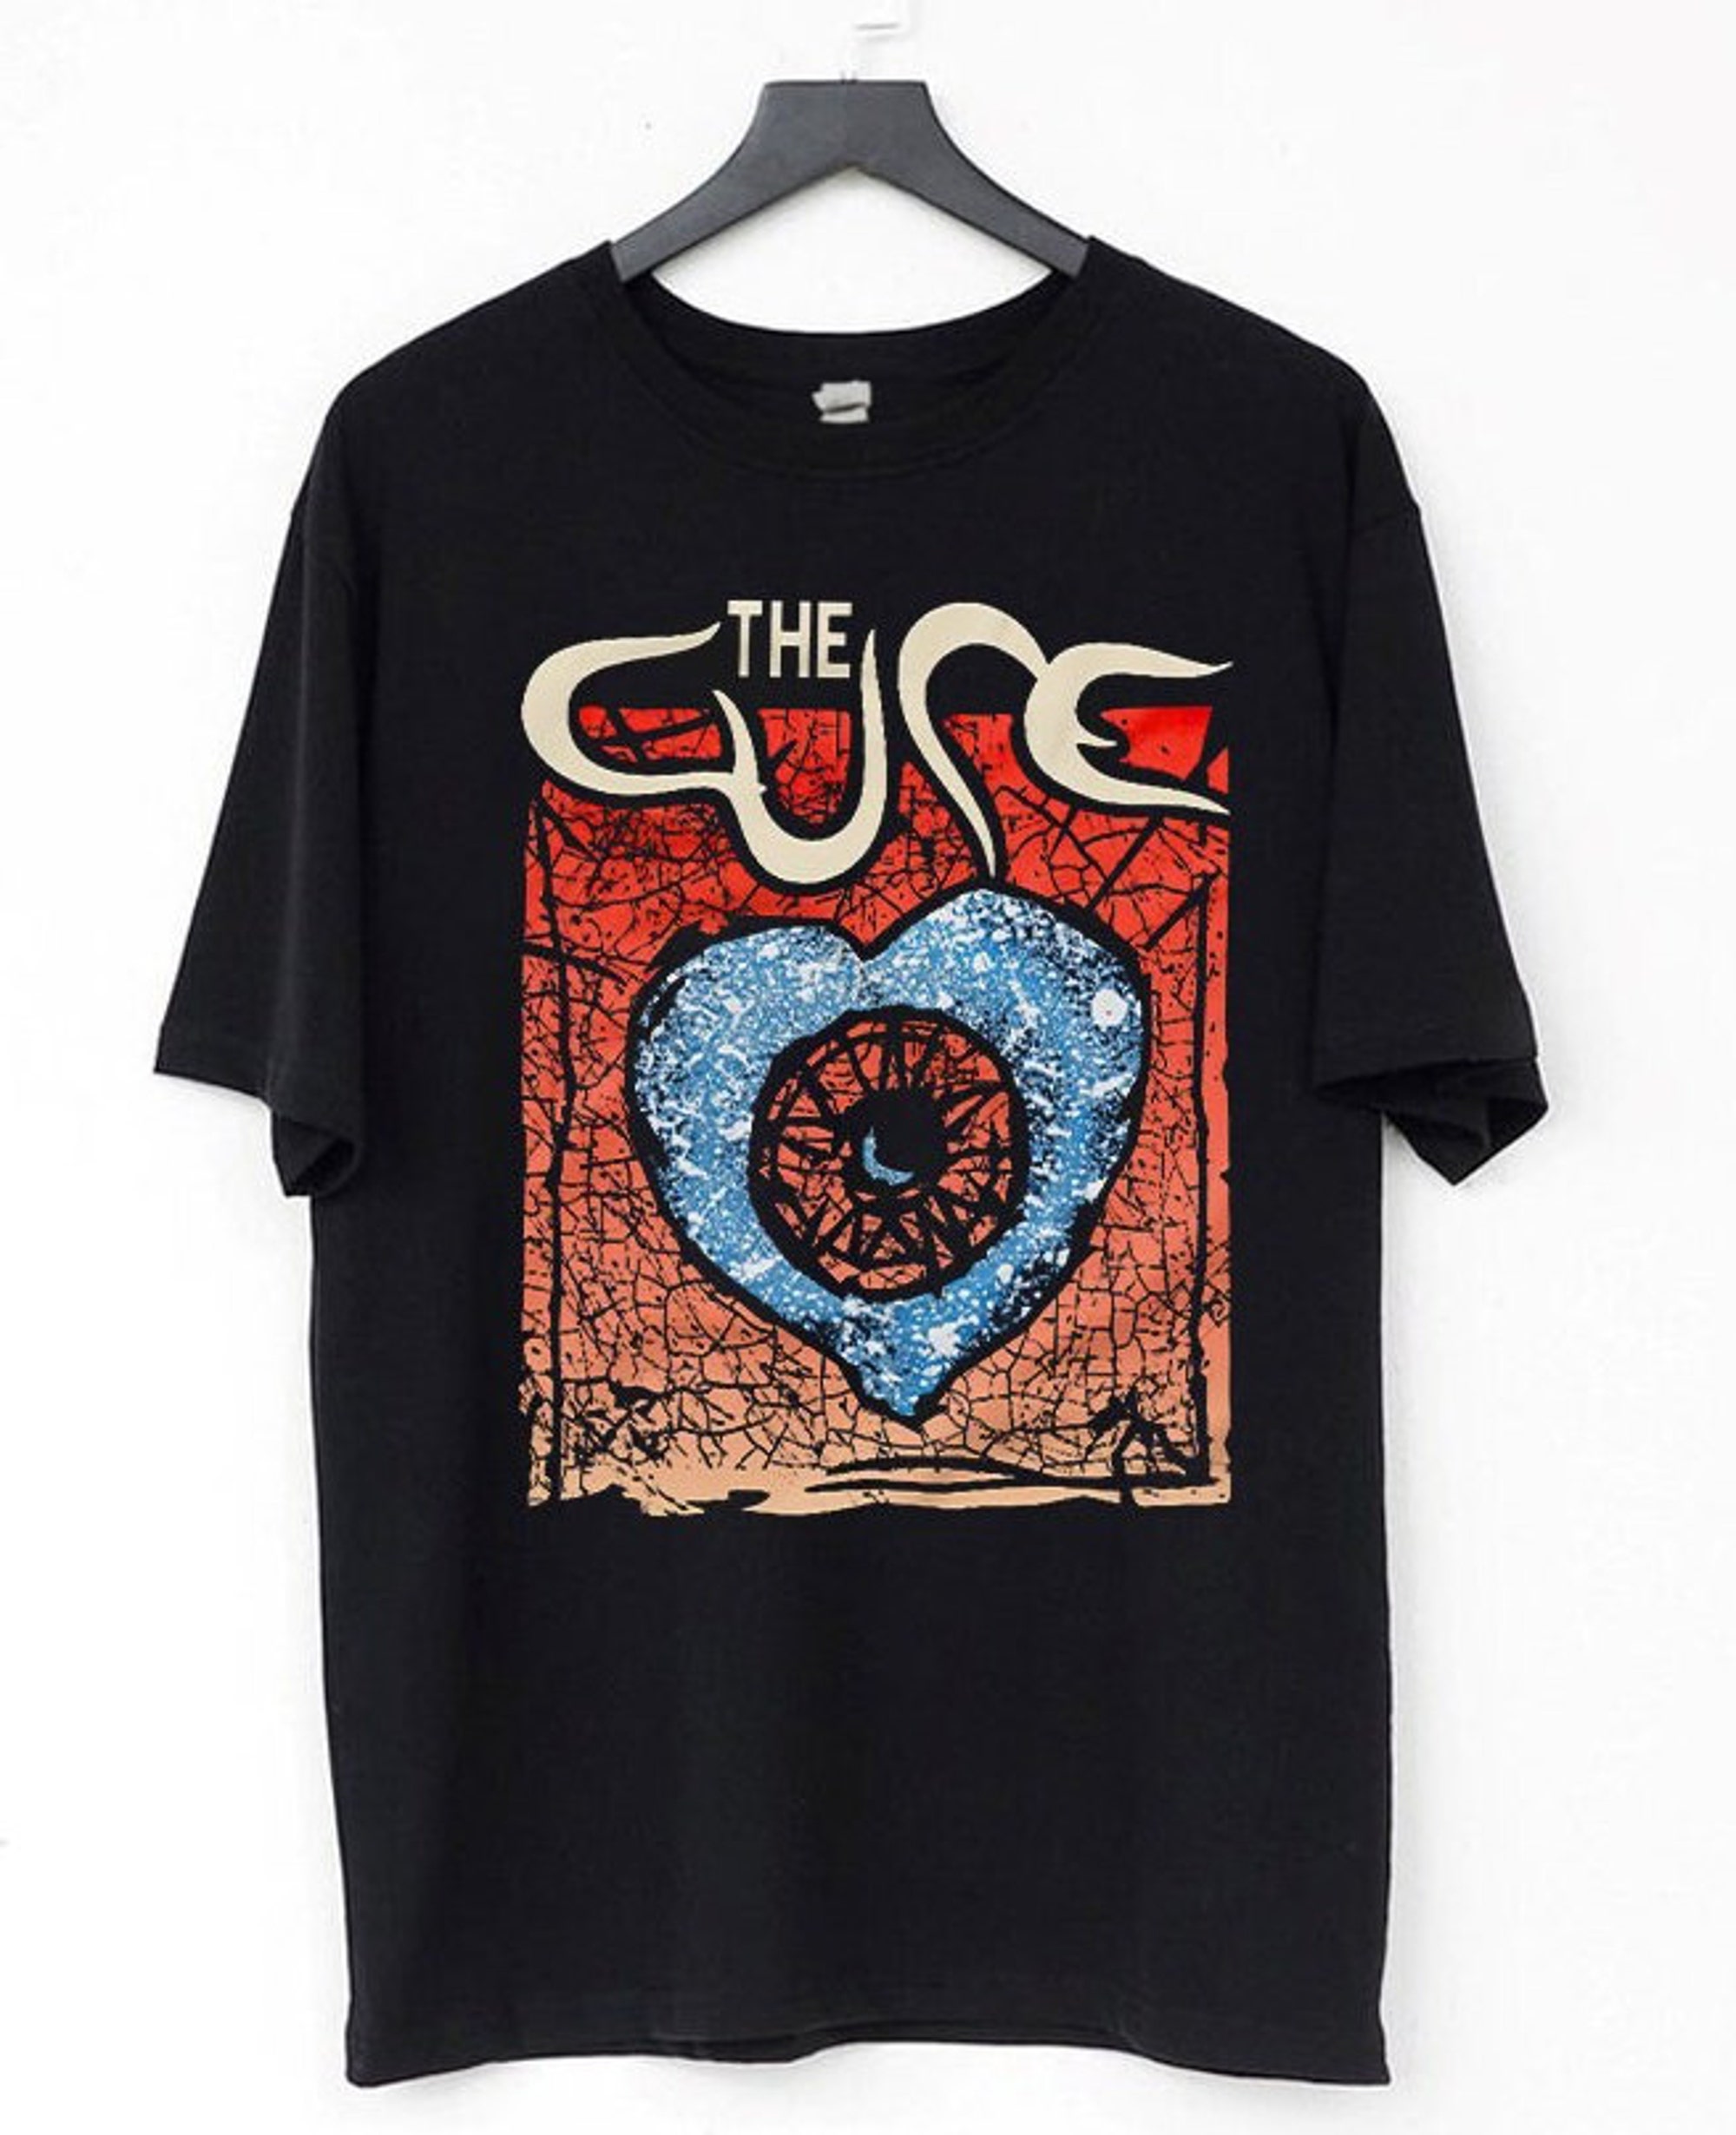 Vintage 1992 The Cure Wish Tour T-Shirt, The Cure Rock Band Tee, 90s Vintage Style Concert Tour T-Shirt